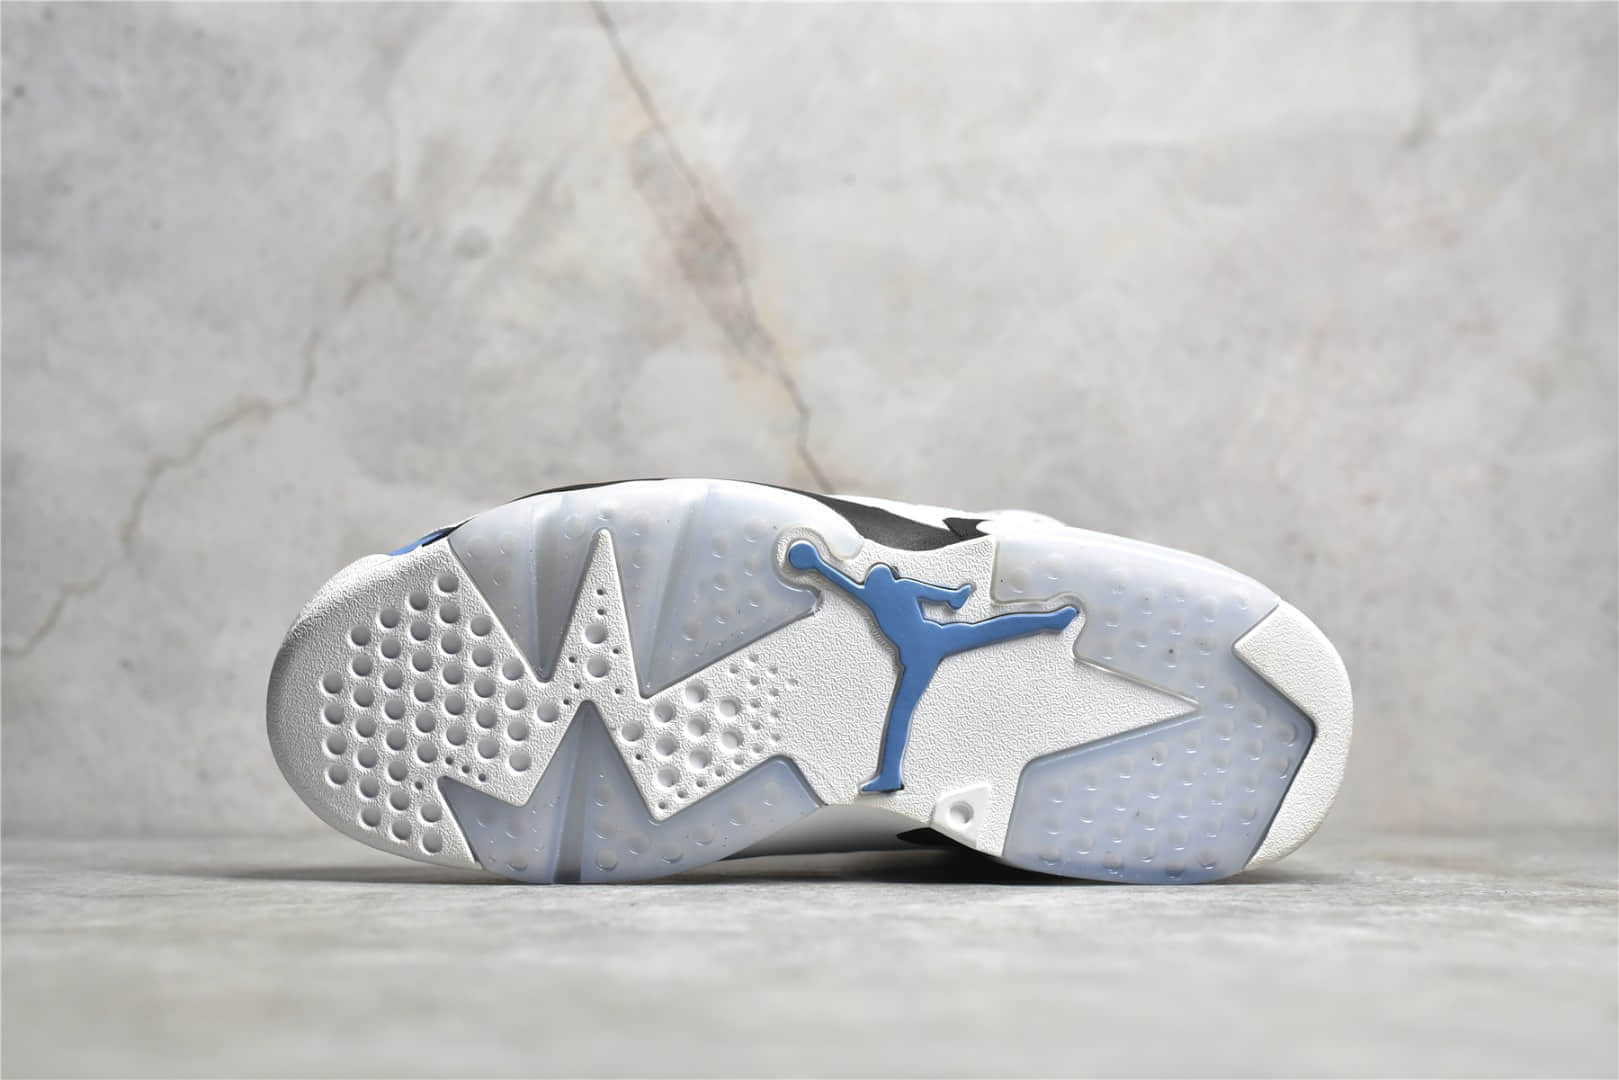 AJ6白蓝实战球鞋 Air Jordan 6 Retro “University Blue” 莆田H12版本AJ6货源 货号：CT8529 410-潮流者之家